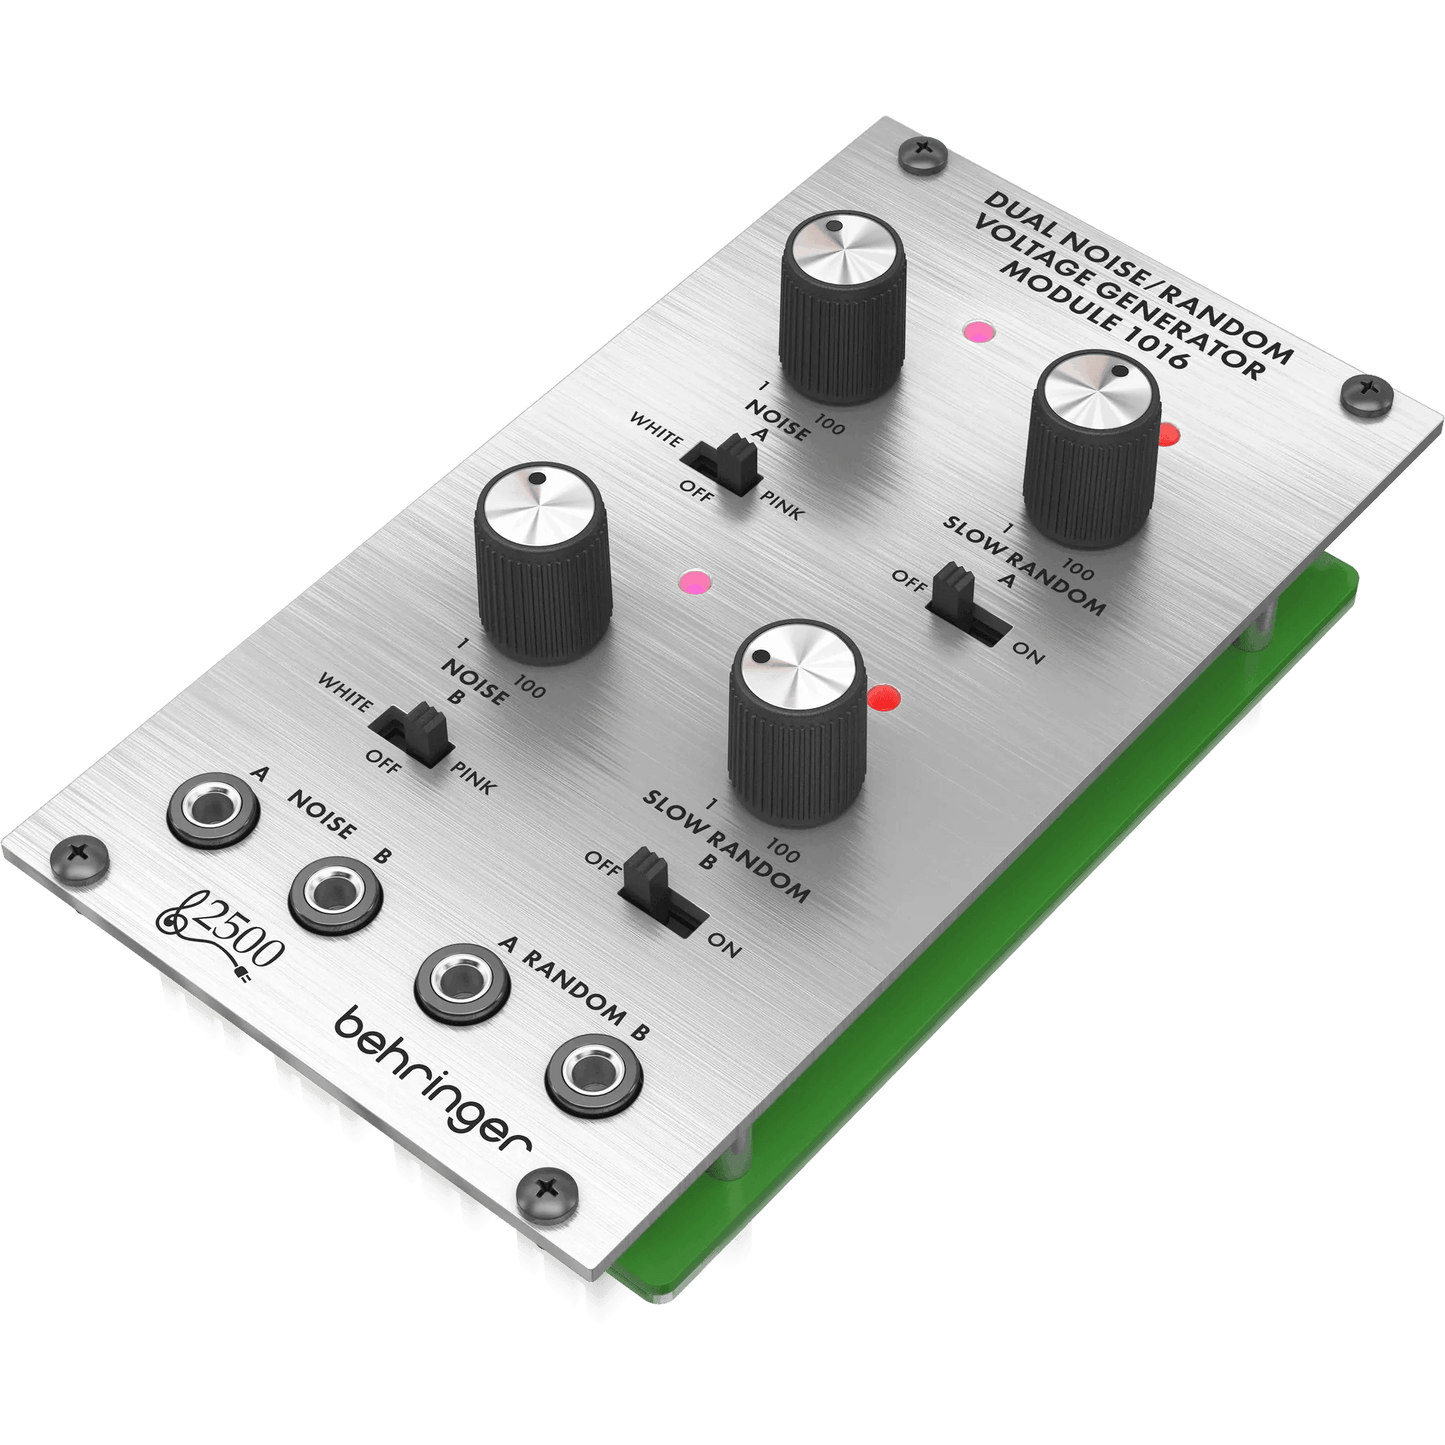 Behringer Dual Noise / Random Voltage Generator Module 1016